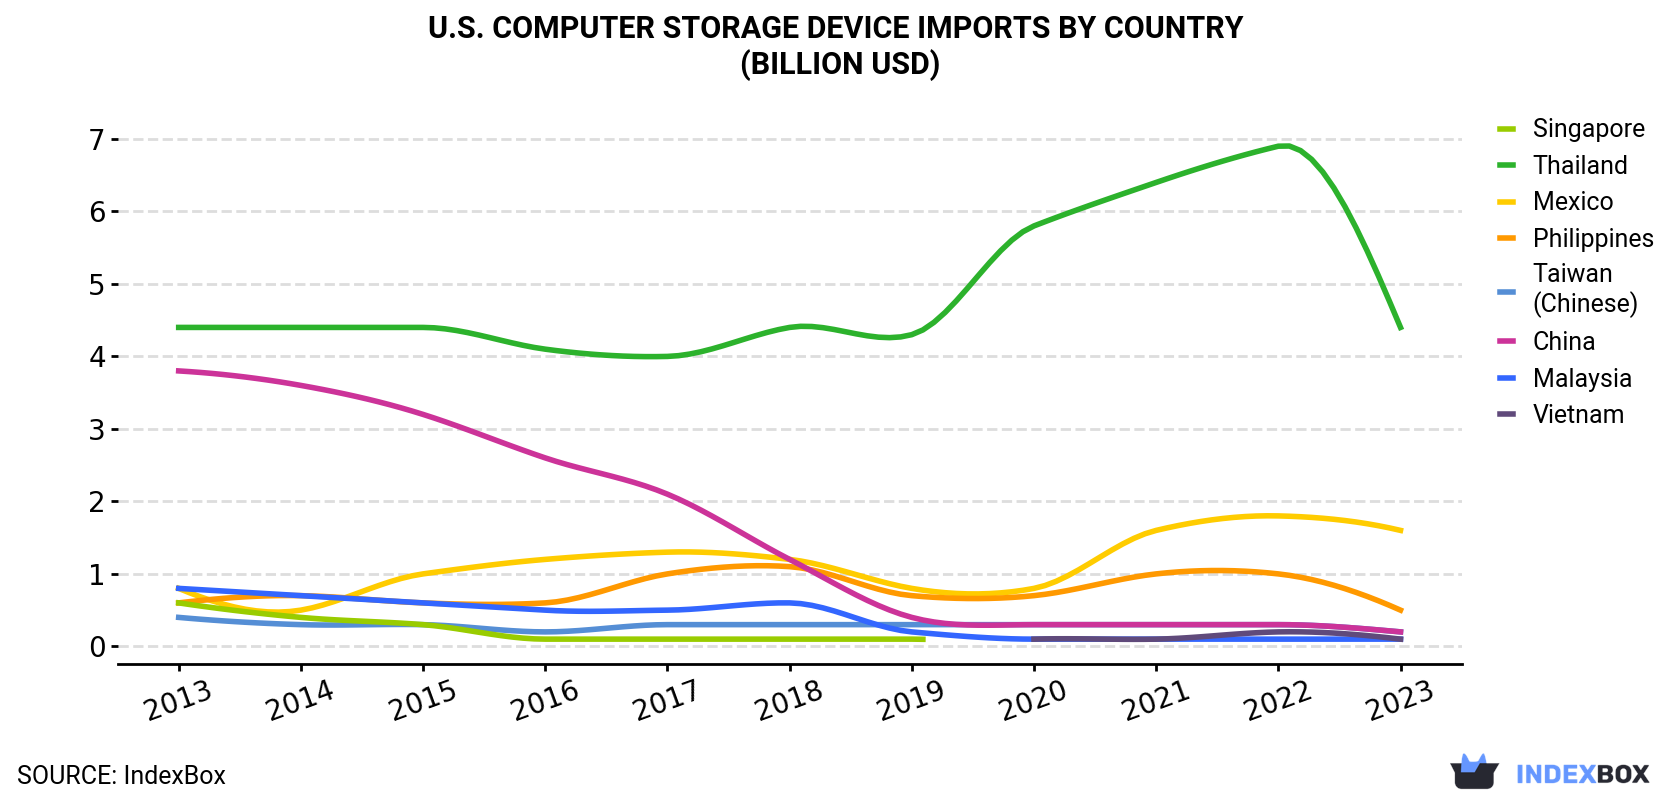 U.S. Computer Storage Device Imports By Country (Billion USD)